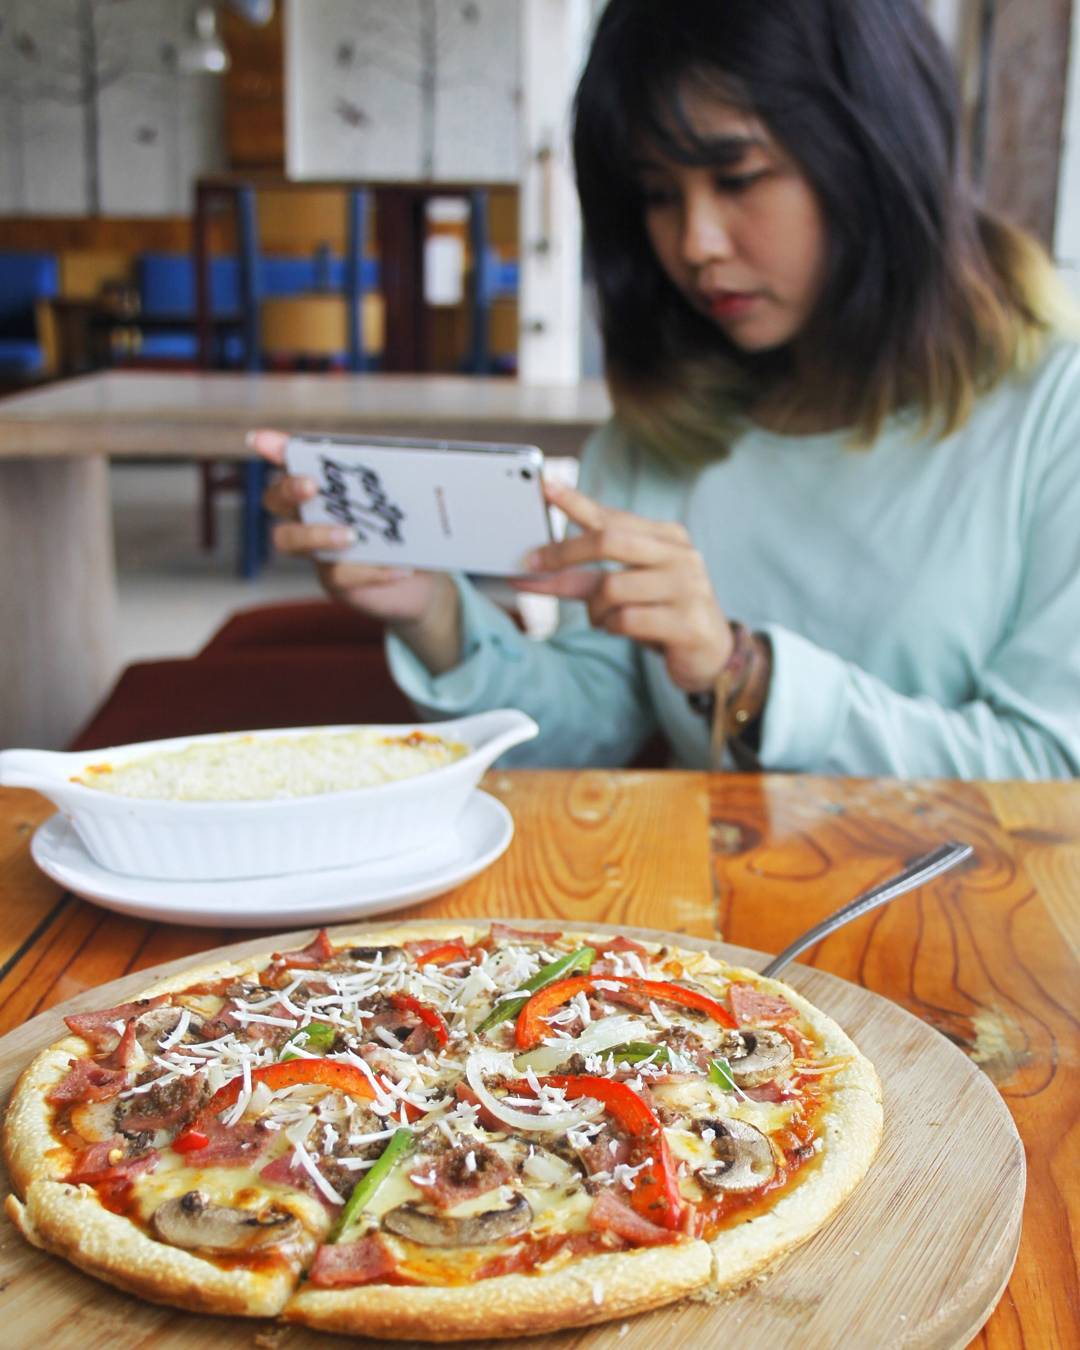 Tempat Makan Enak Di Bandung Pino Pizza Image From @lensakreatifbandung